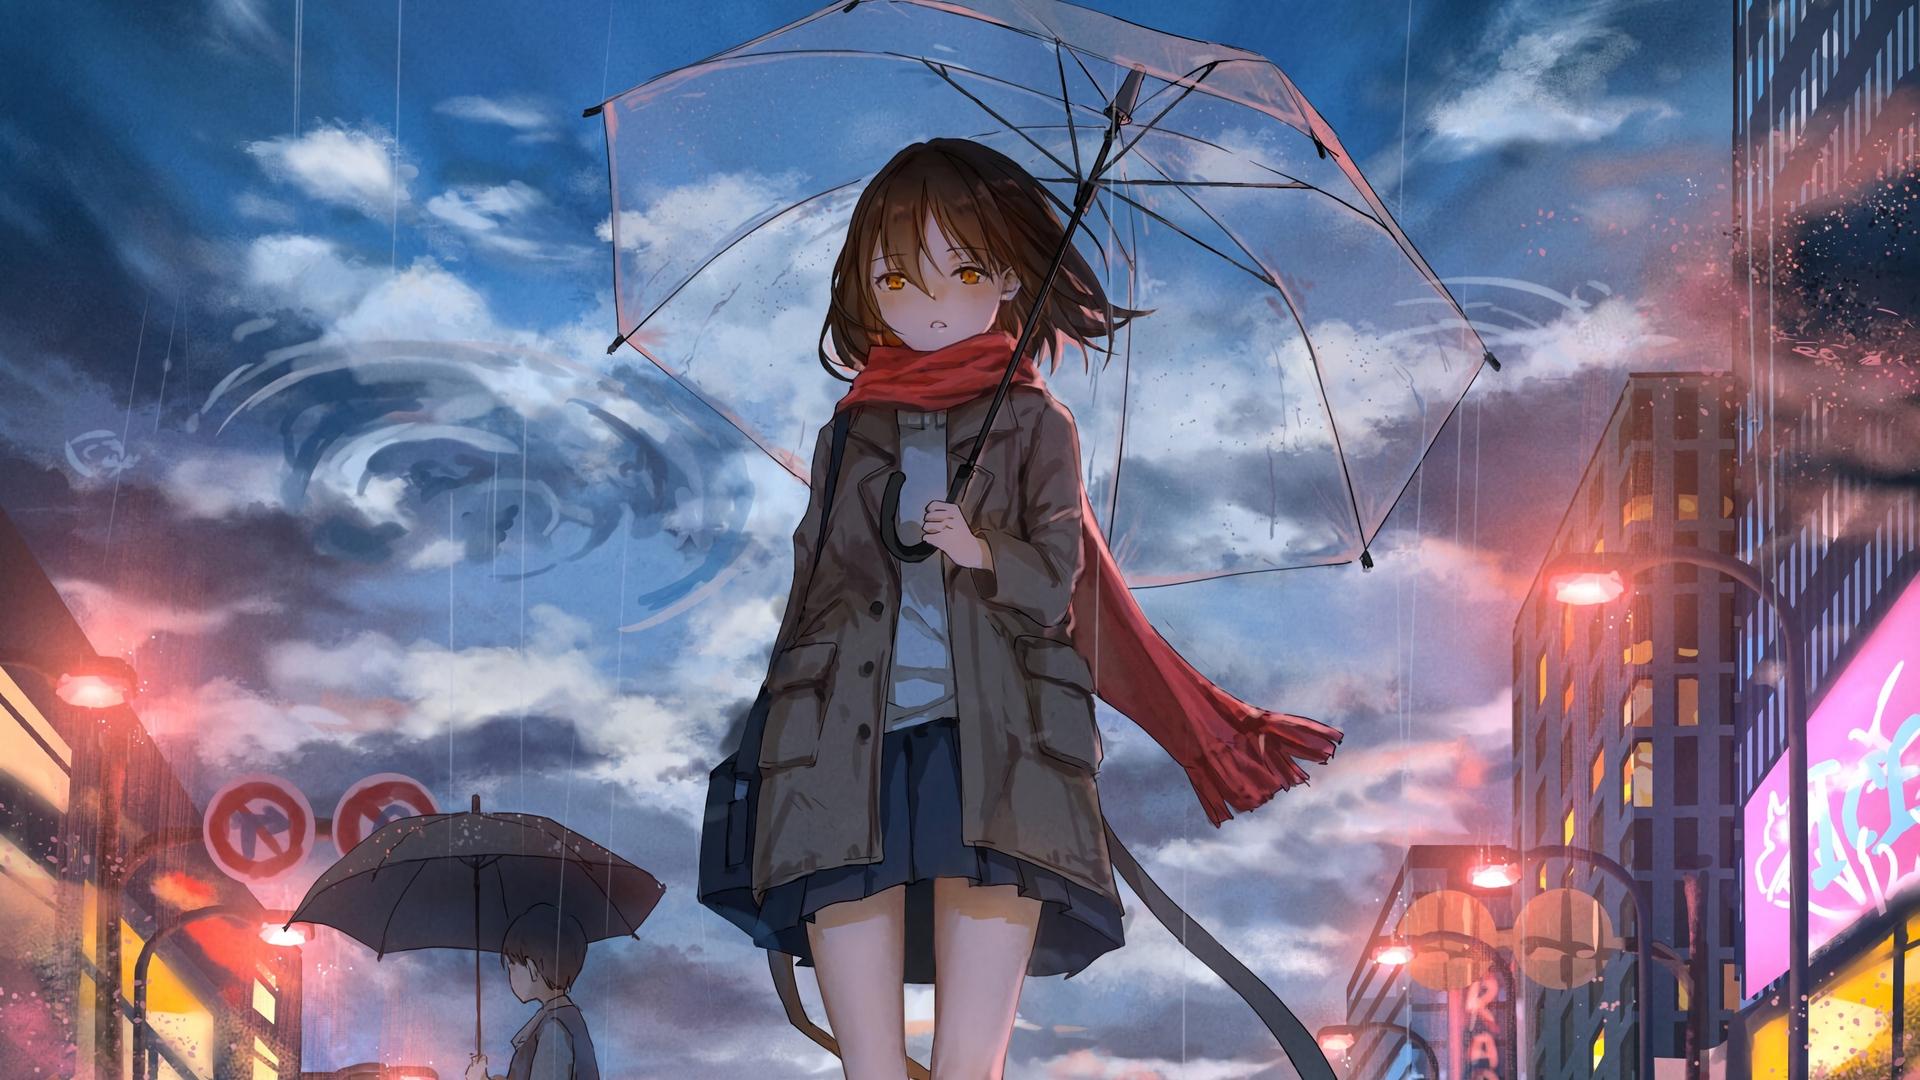 Download wallpaper 1920x1080 girl, umbrella, anime, rain, sadness